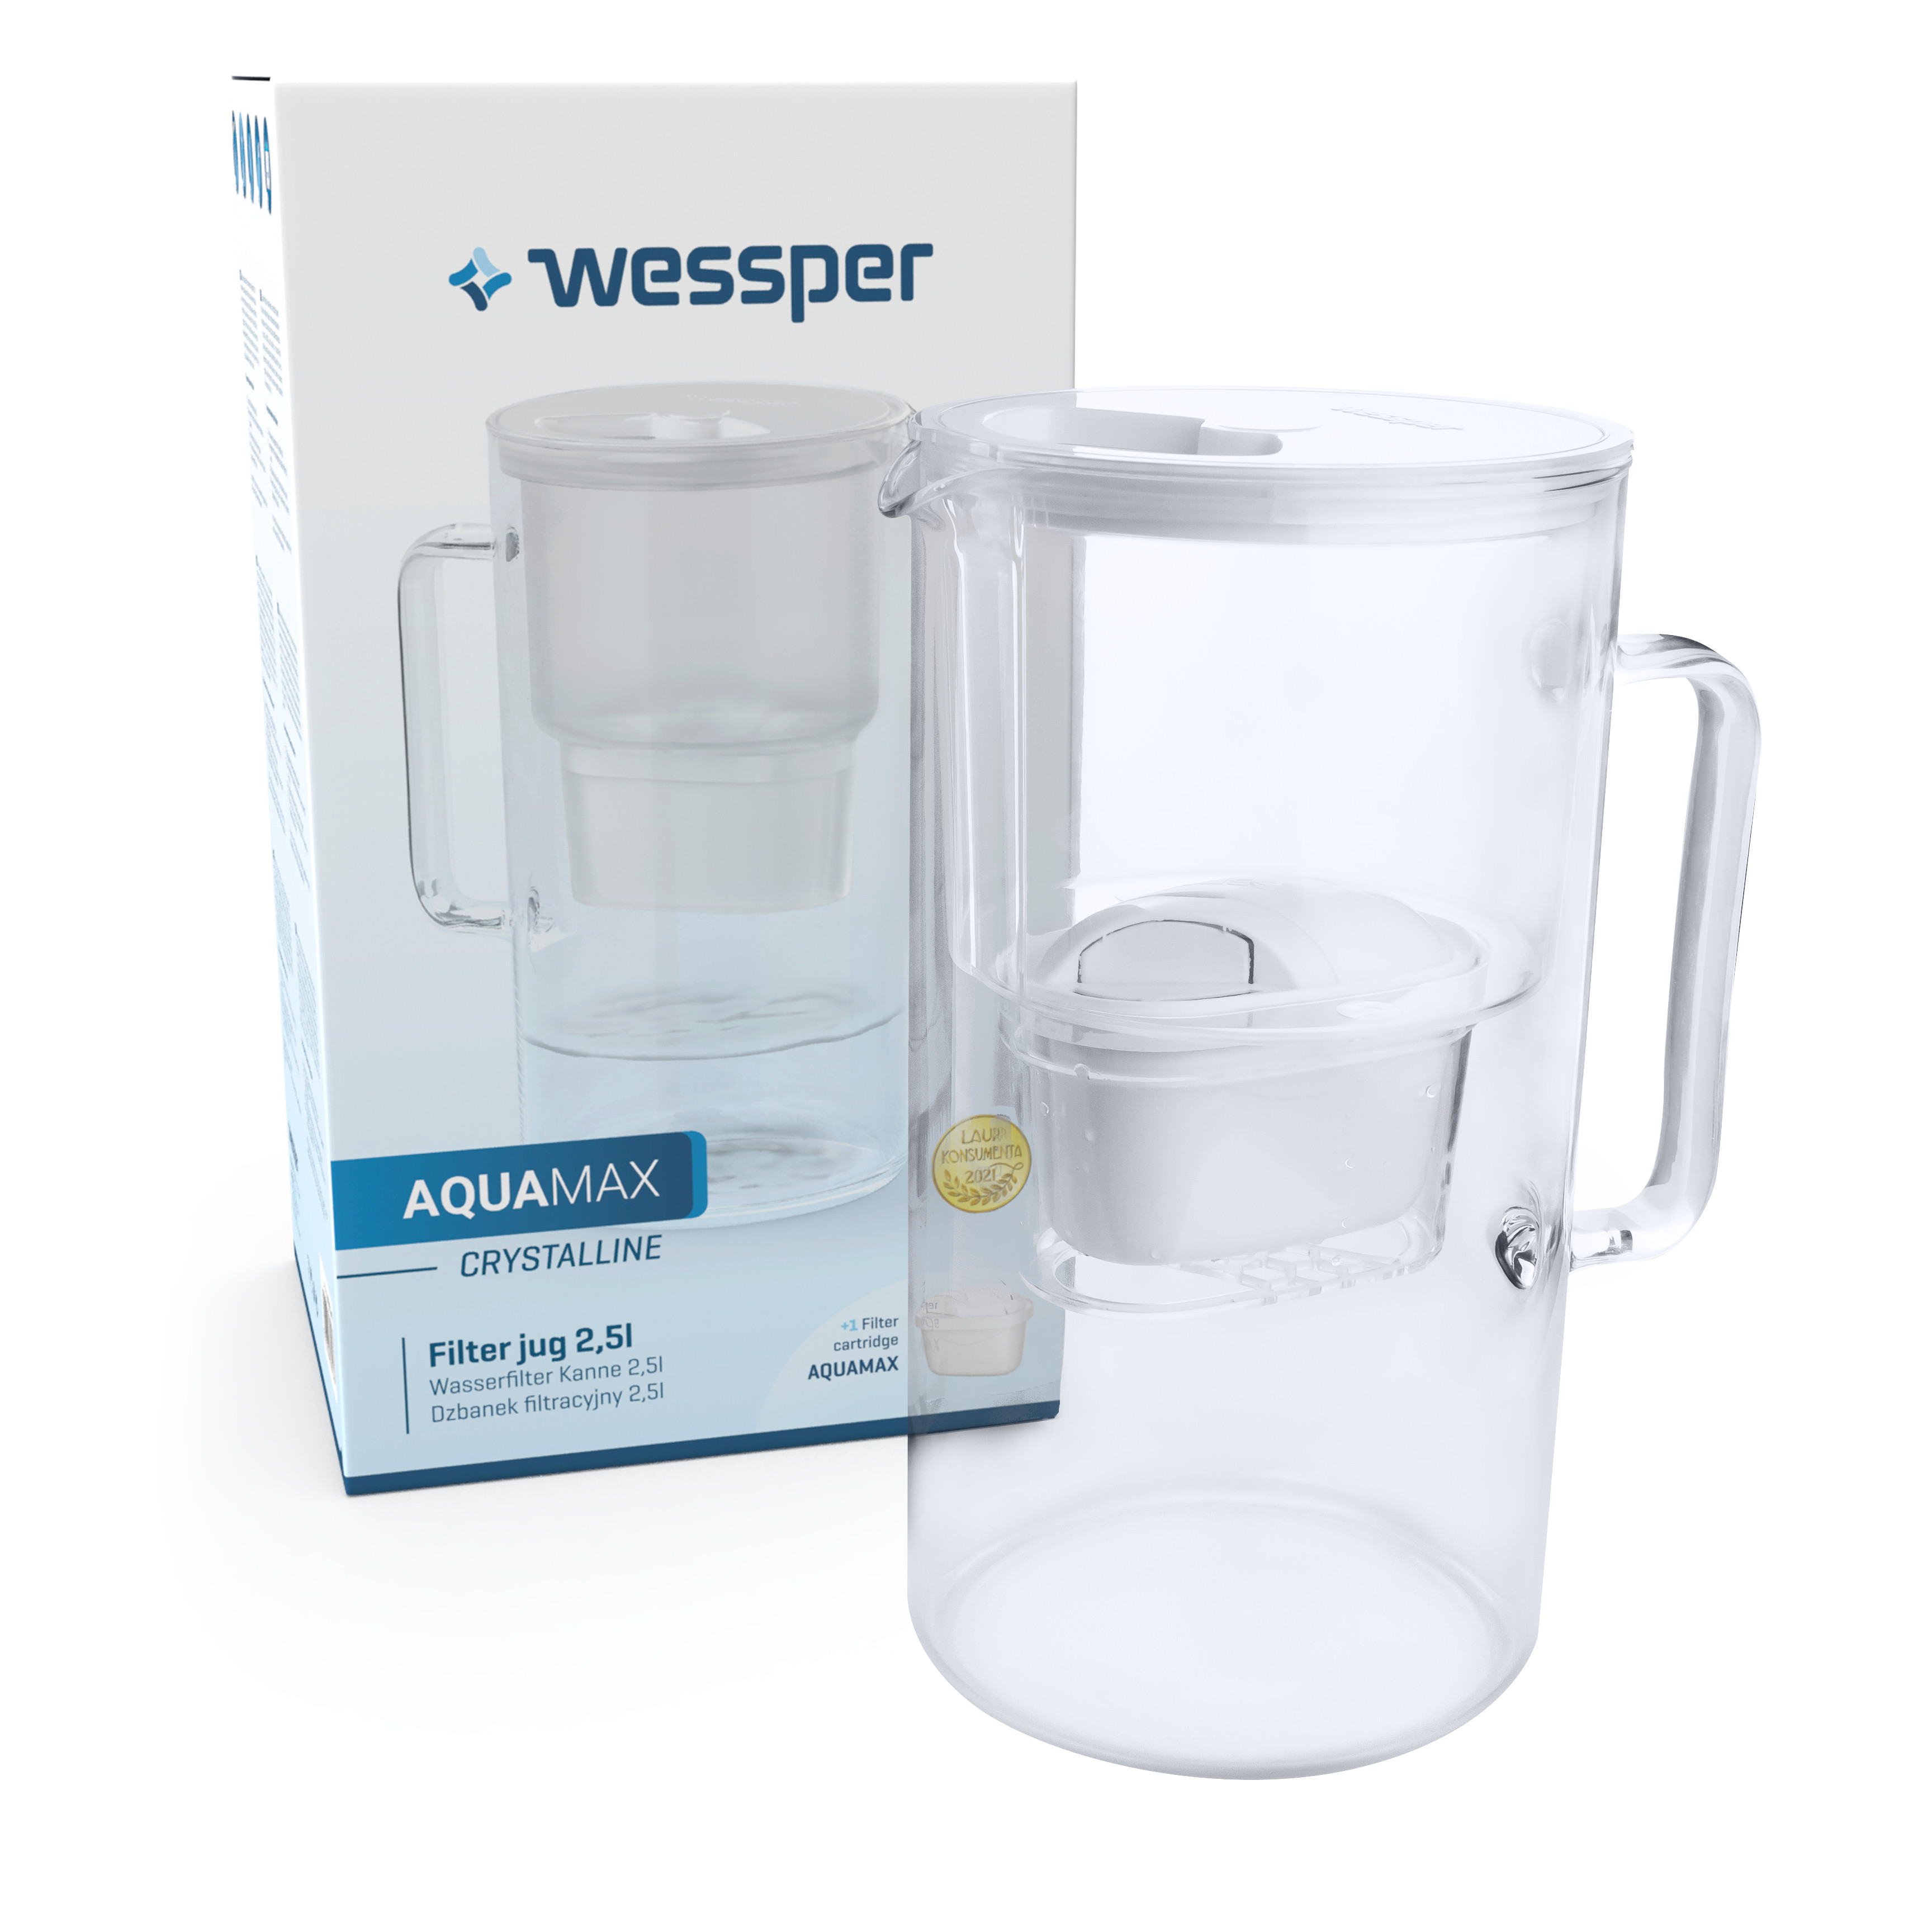 Aquamax Caraffa filtro acqua Wessper AquaMax Crystalline 2,5 l e filtro 